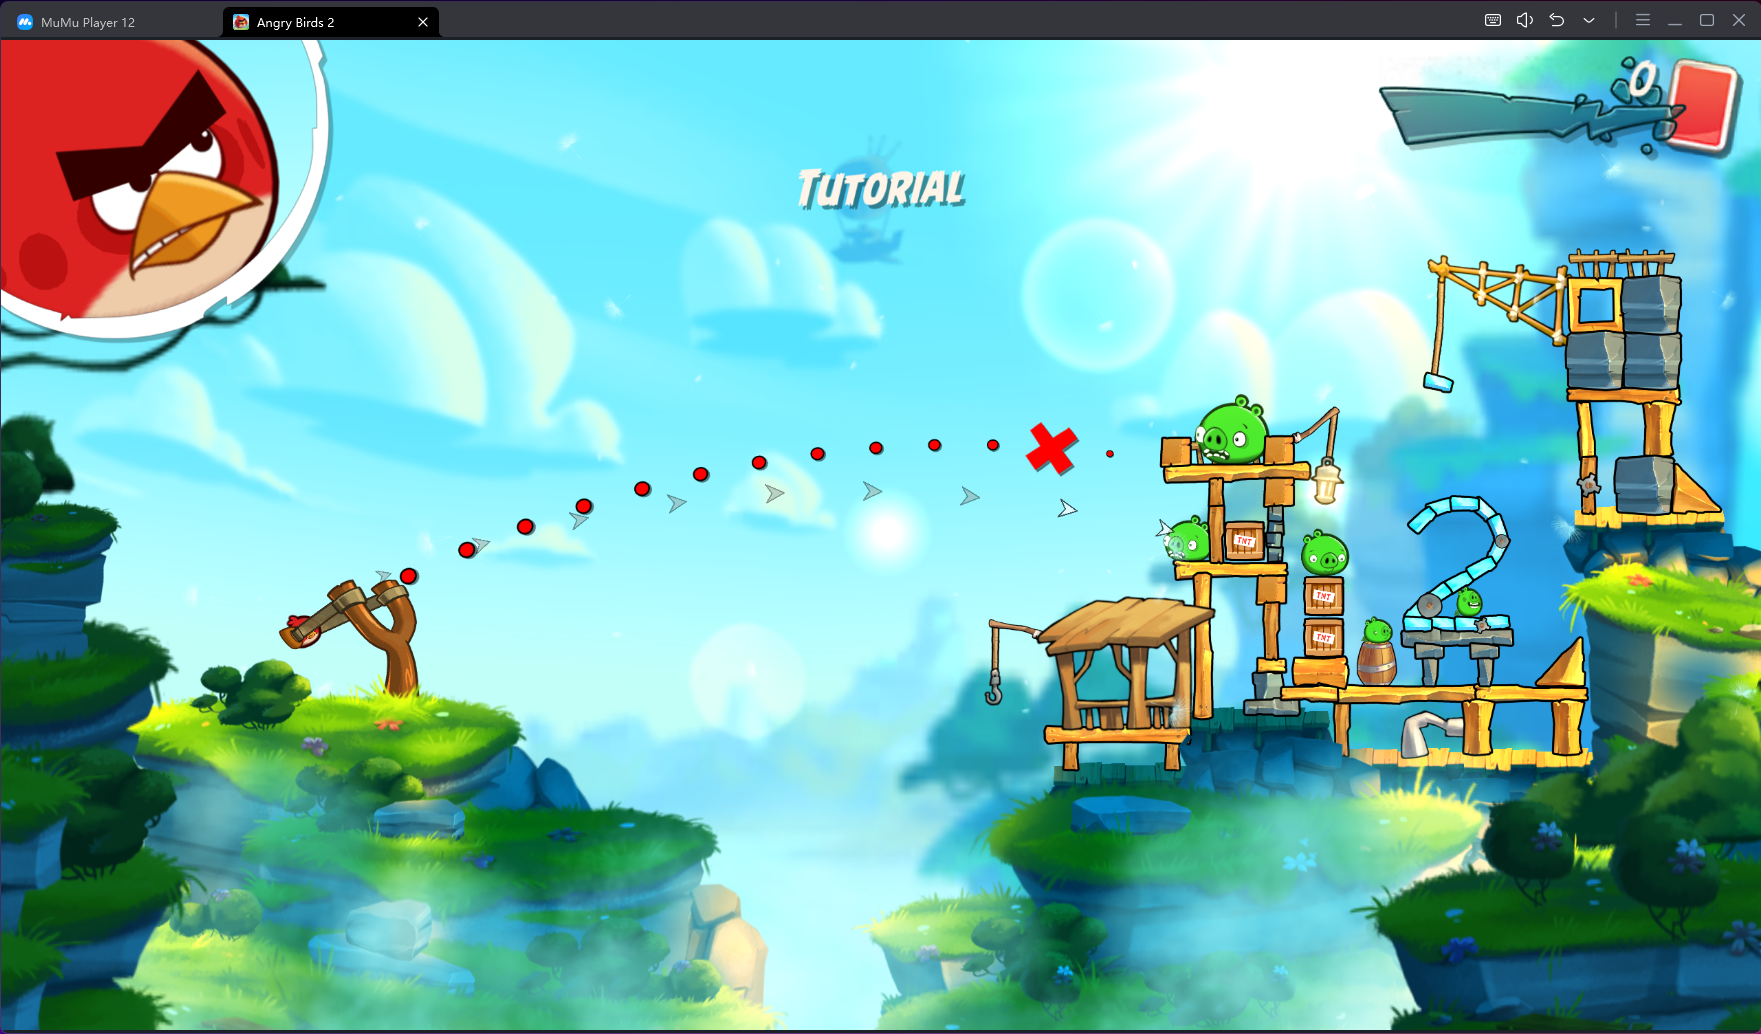 Angry Birds 2 running on Windows using MuMu Player 12